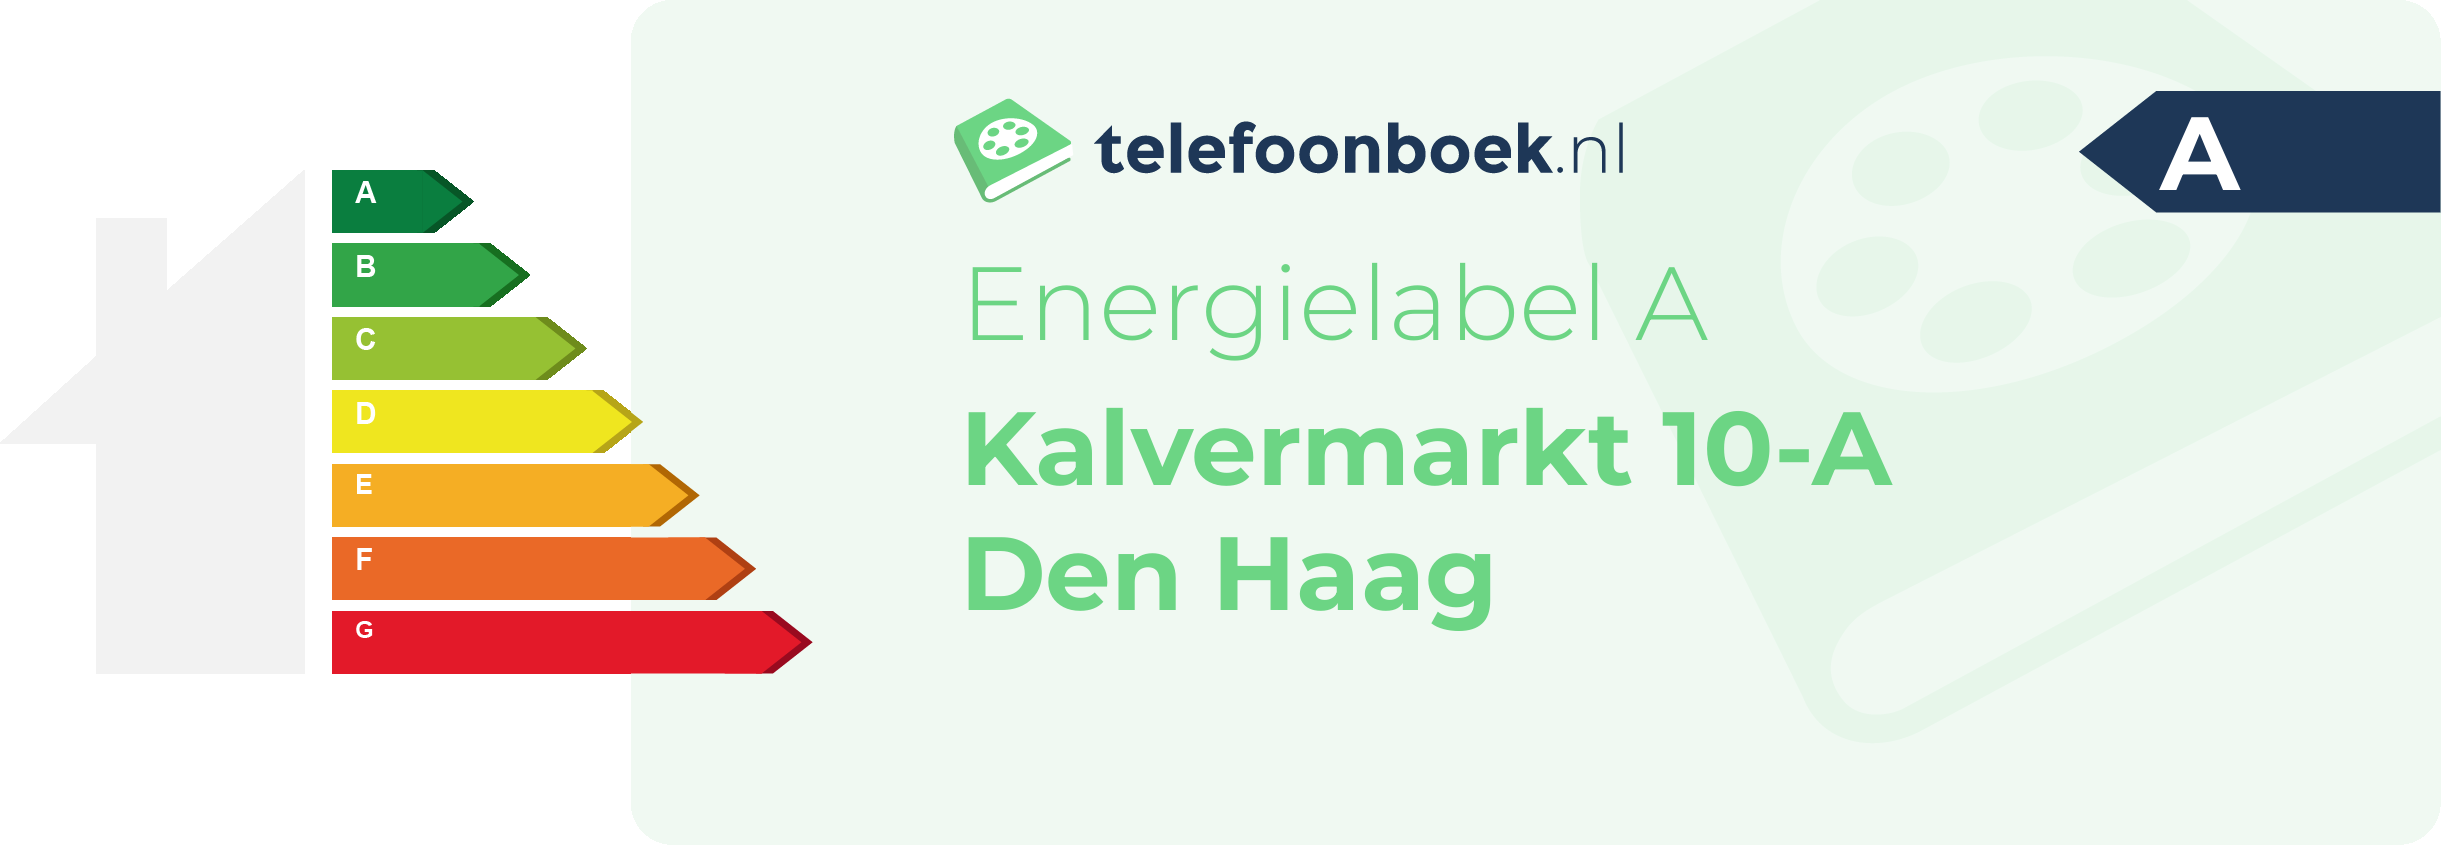 Energielabel Kalvermarkt 10-A Den Haag